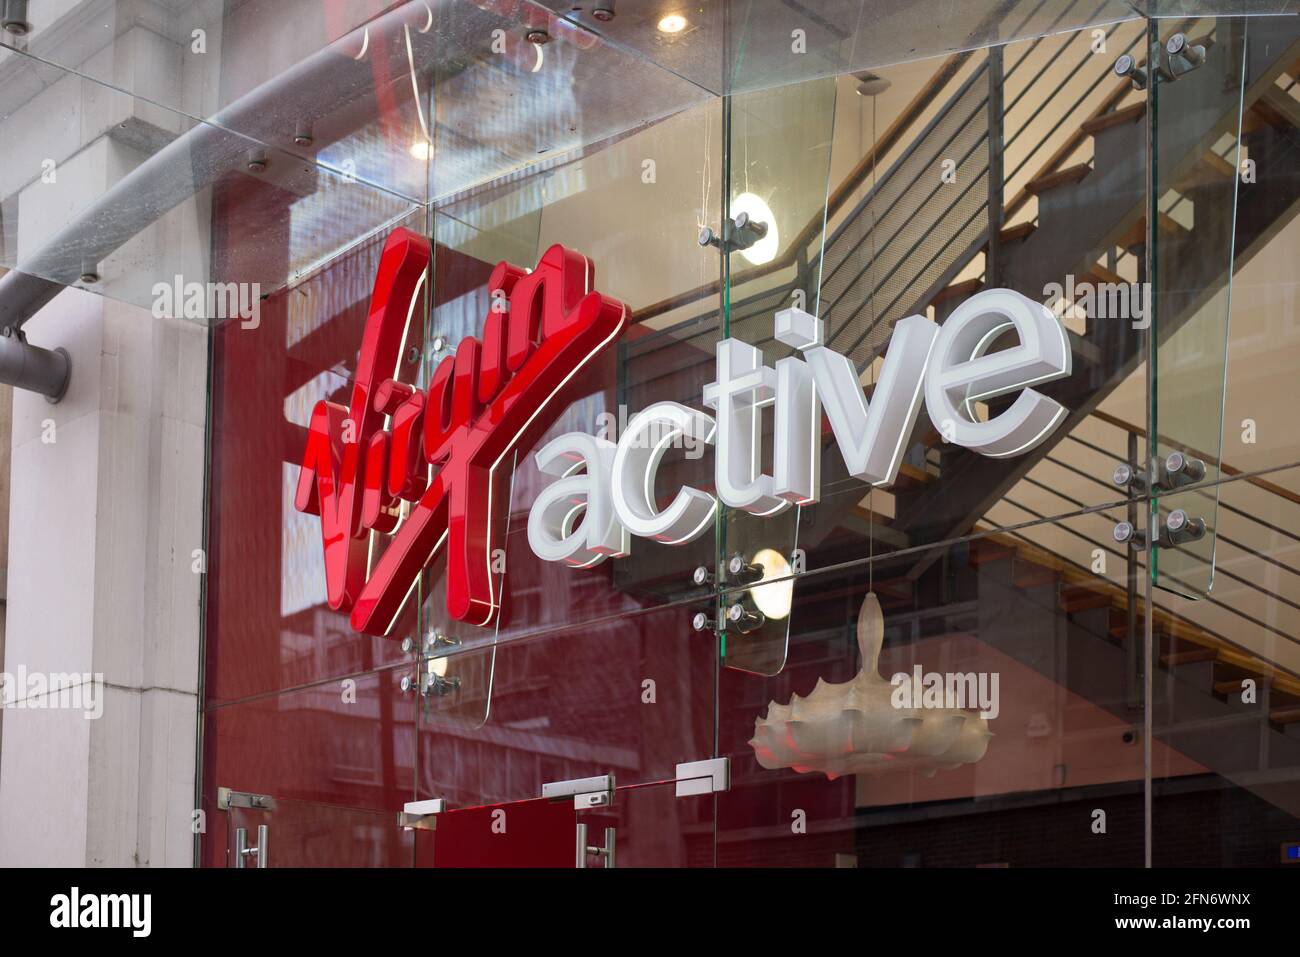 V.shop vshop v shop Virgin retail shop London Stock Photo - Alamy